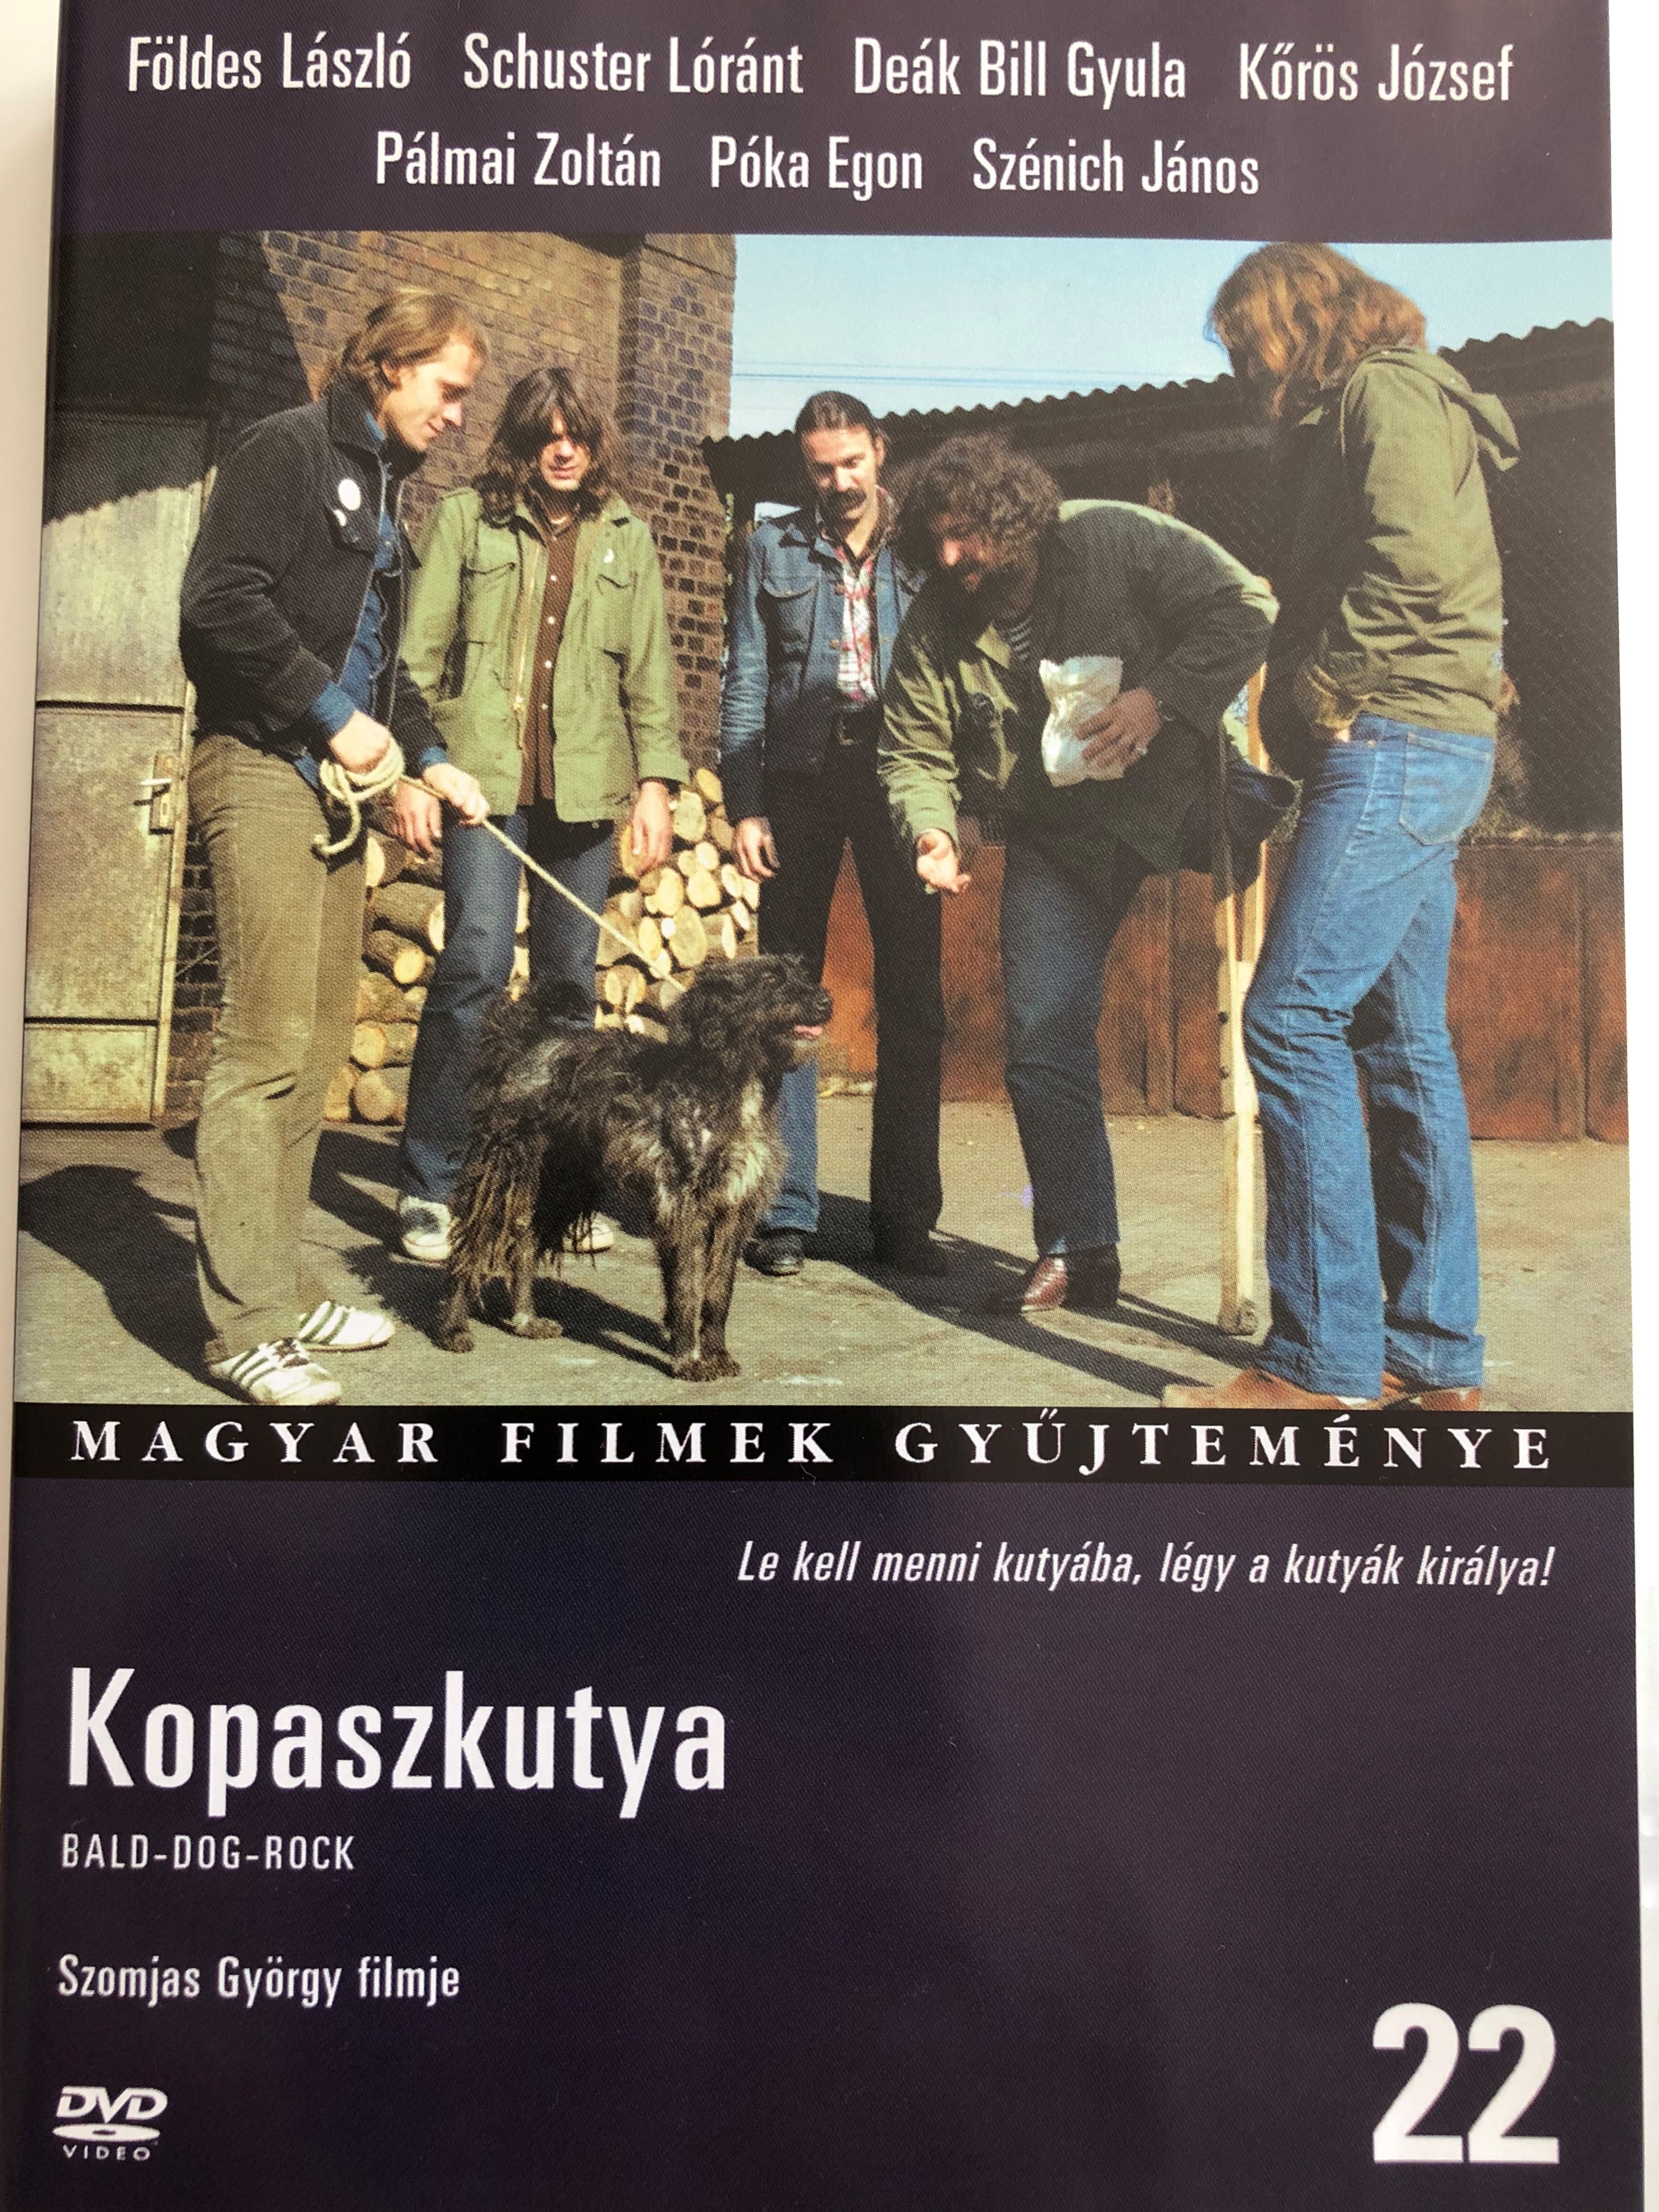 kopaszkutya-dvd-1981-bald-dog-rock-directed-by-szomjas-gy-rgy-starring-f-ldes-l-szl-schuster-l-r-nt-de-k-bill-gyula-k-r-s-j-zsef-p-lmai-zolt-n-p-ka-egon-sz-nich-j-nos-hungarian-film-collection-1-.jpg